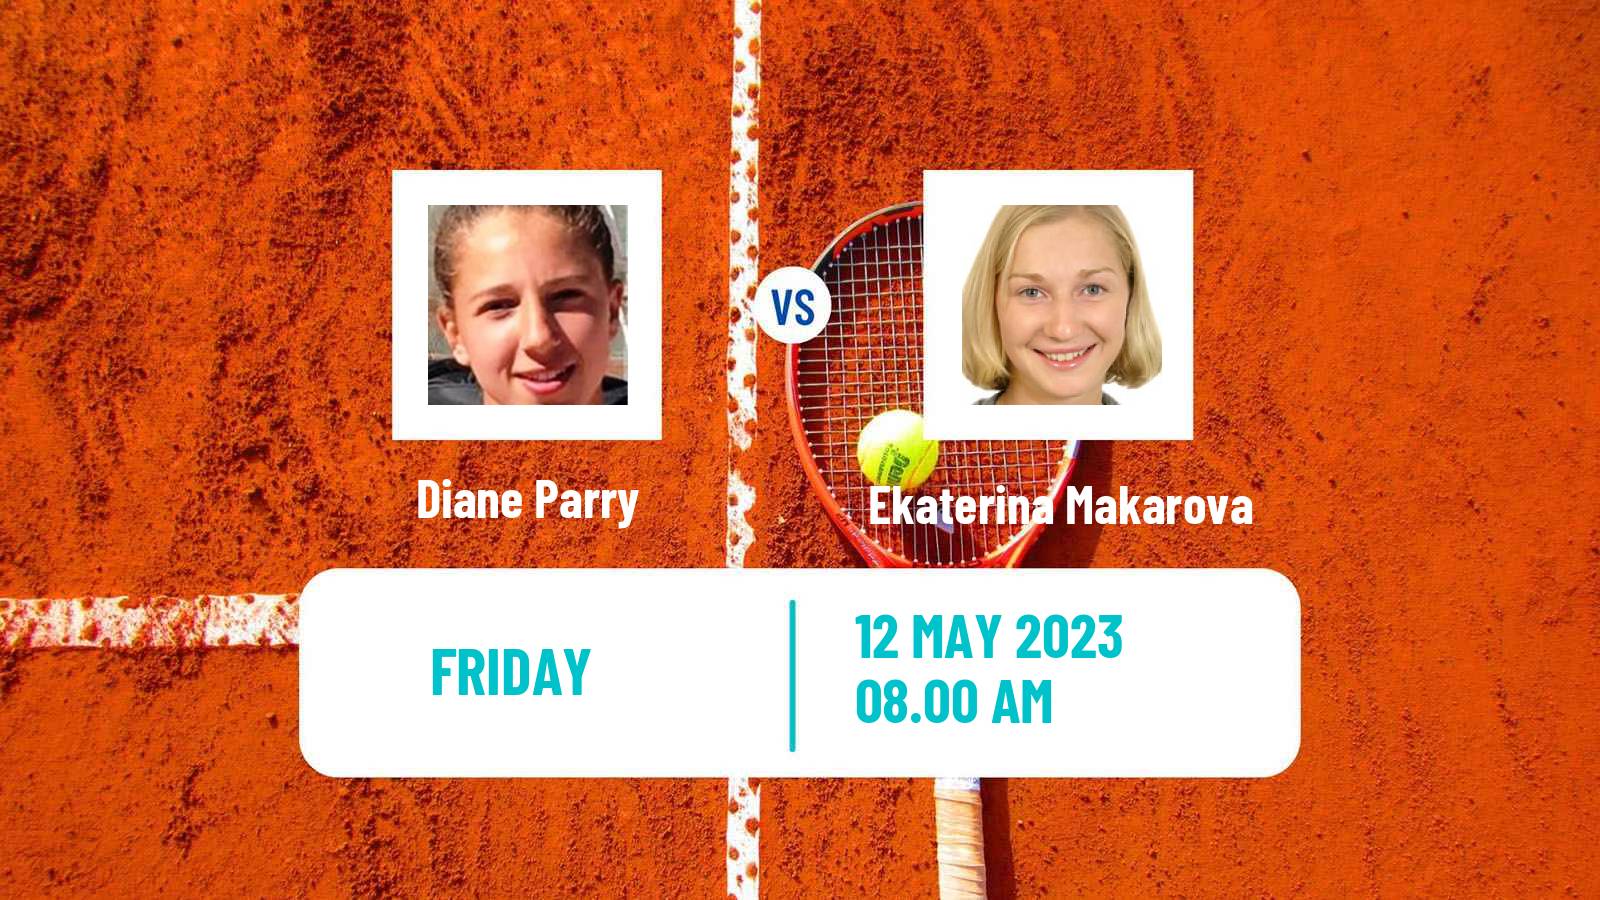 Tennis ITF Tournaments Diane Parry - Ekaterina Makarova